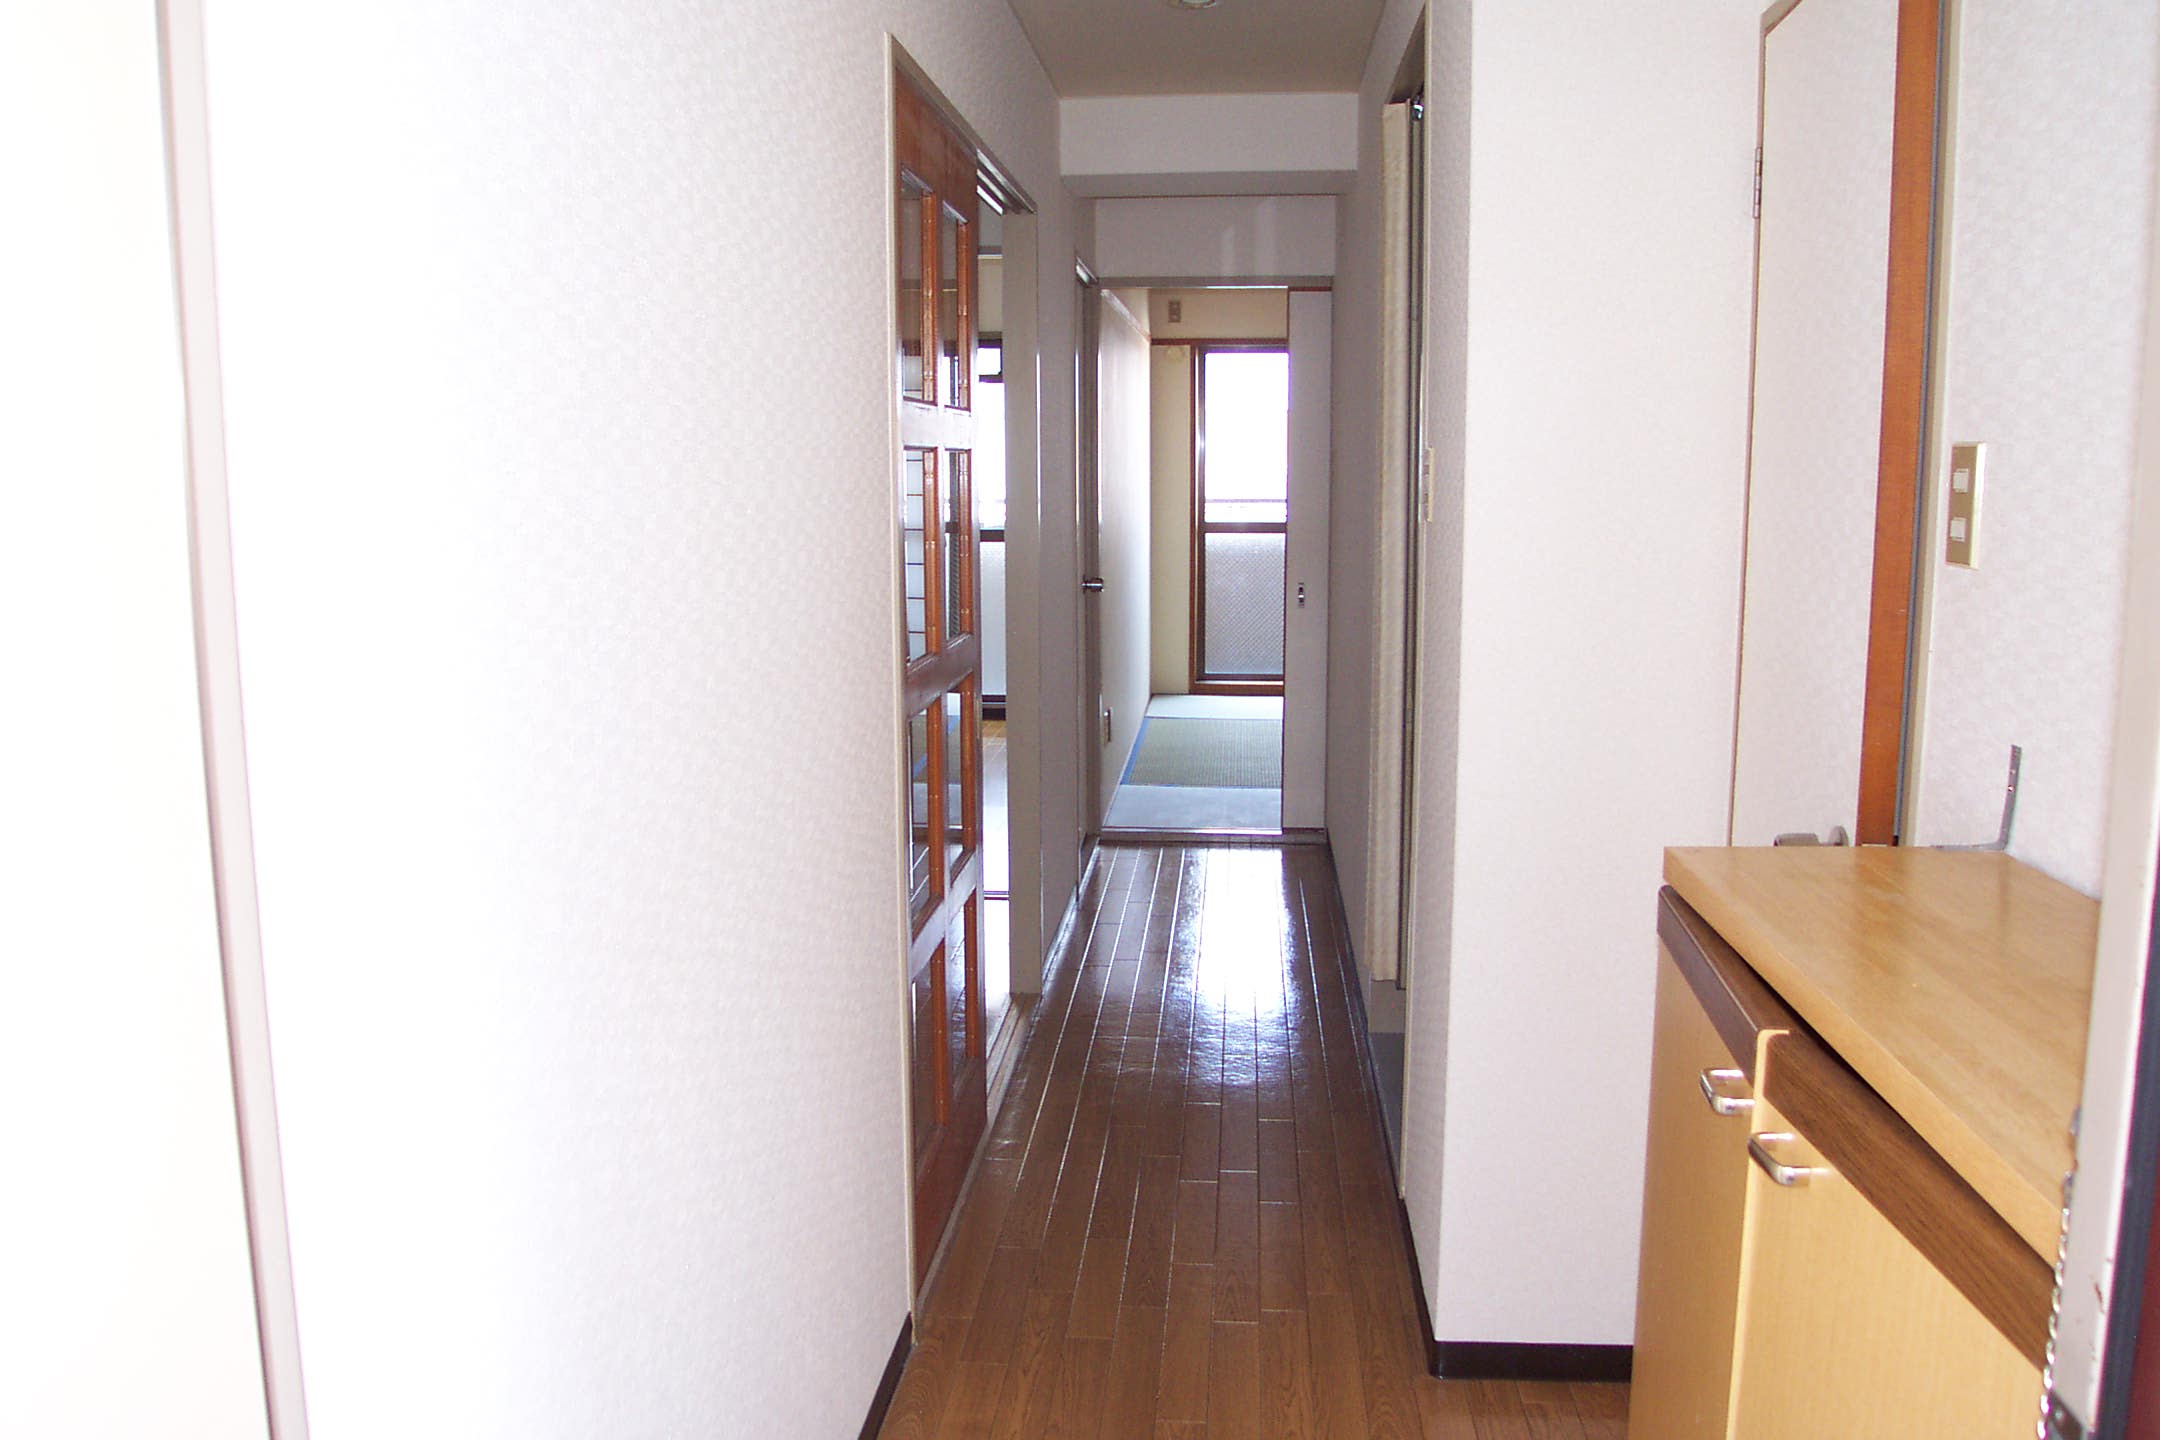 Other room space. Corridor